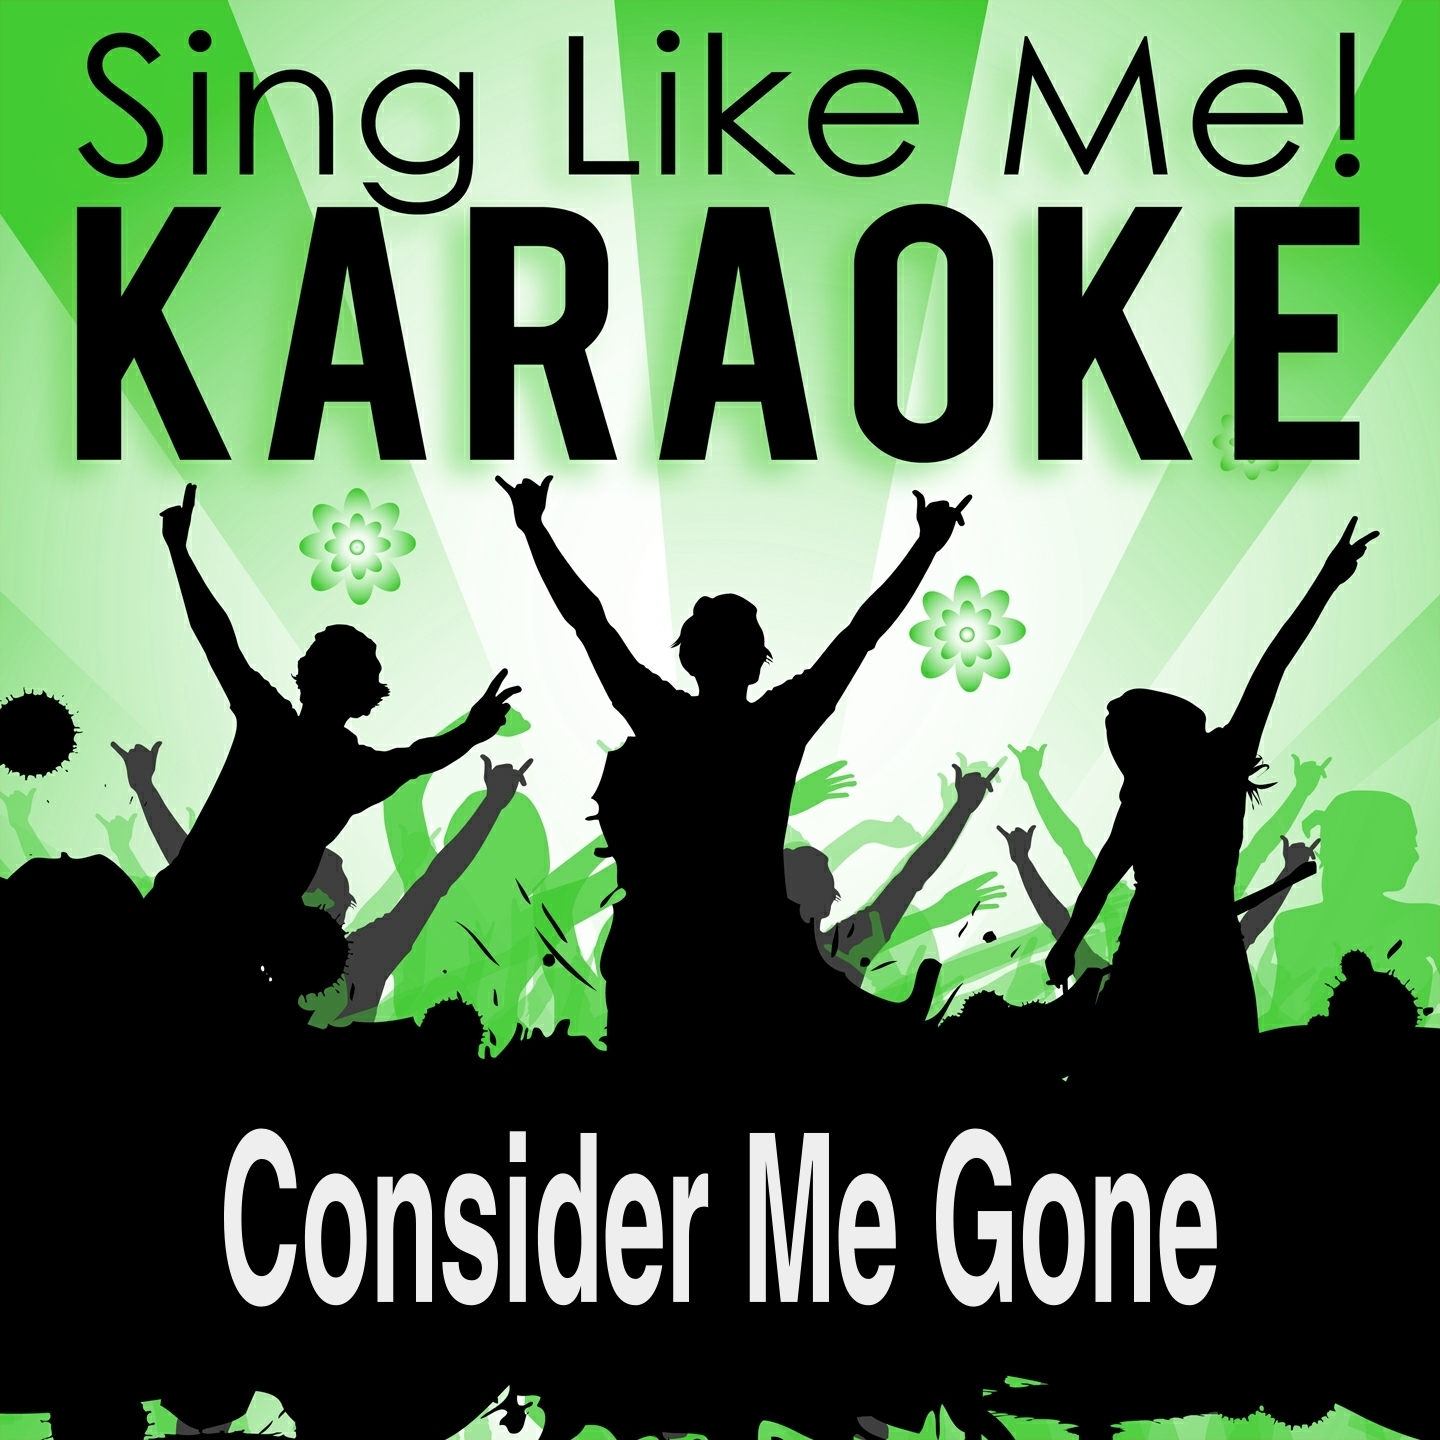 Consider Me Gone (Karaoke Version) (Originally Performed By Sting)